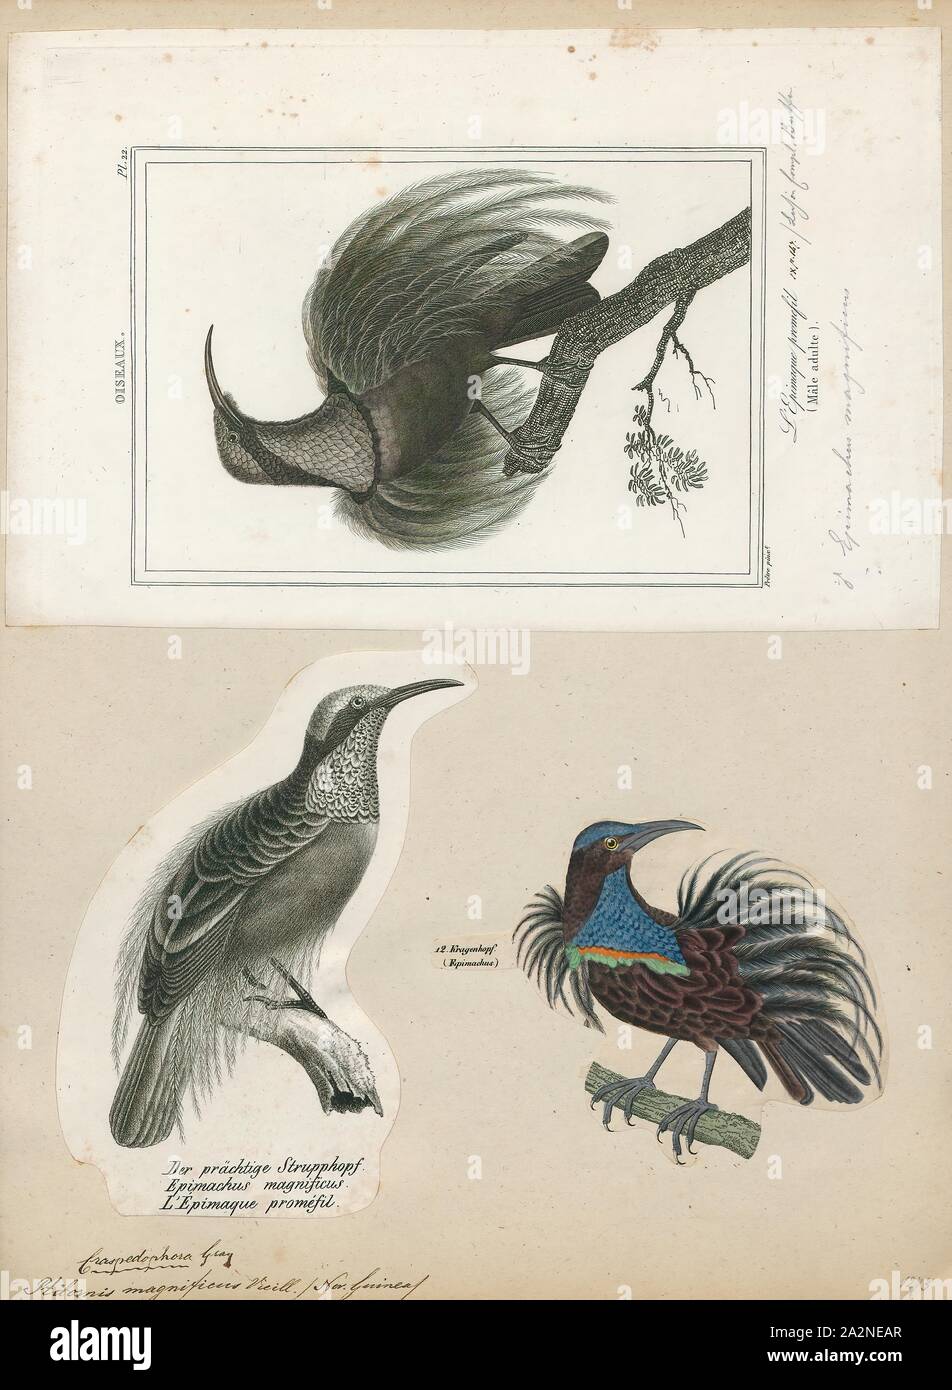 Ptilornis magnificus, Print, 1700-1880 Stock Photo